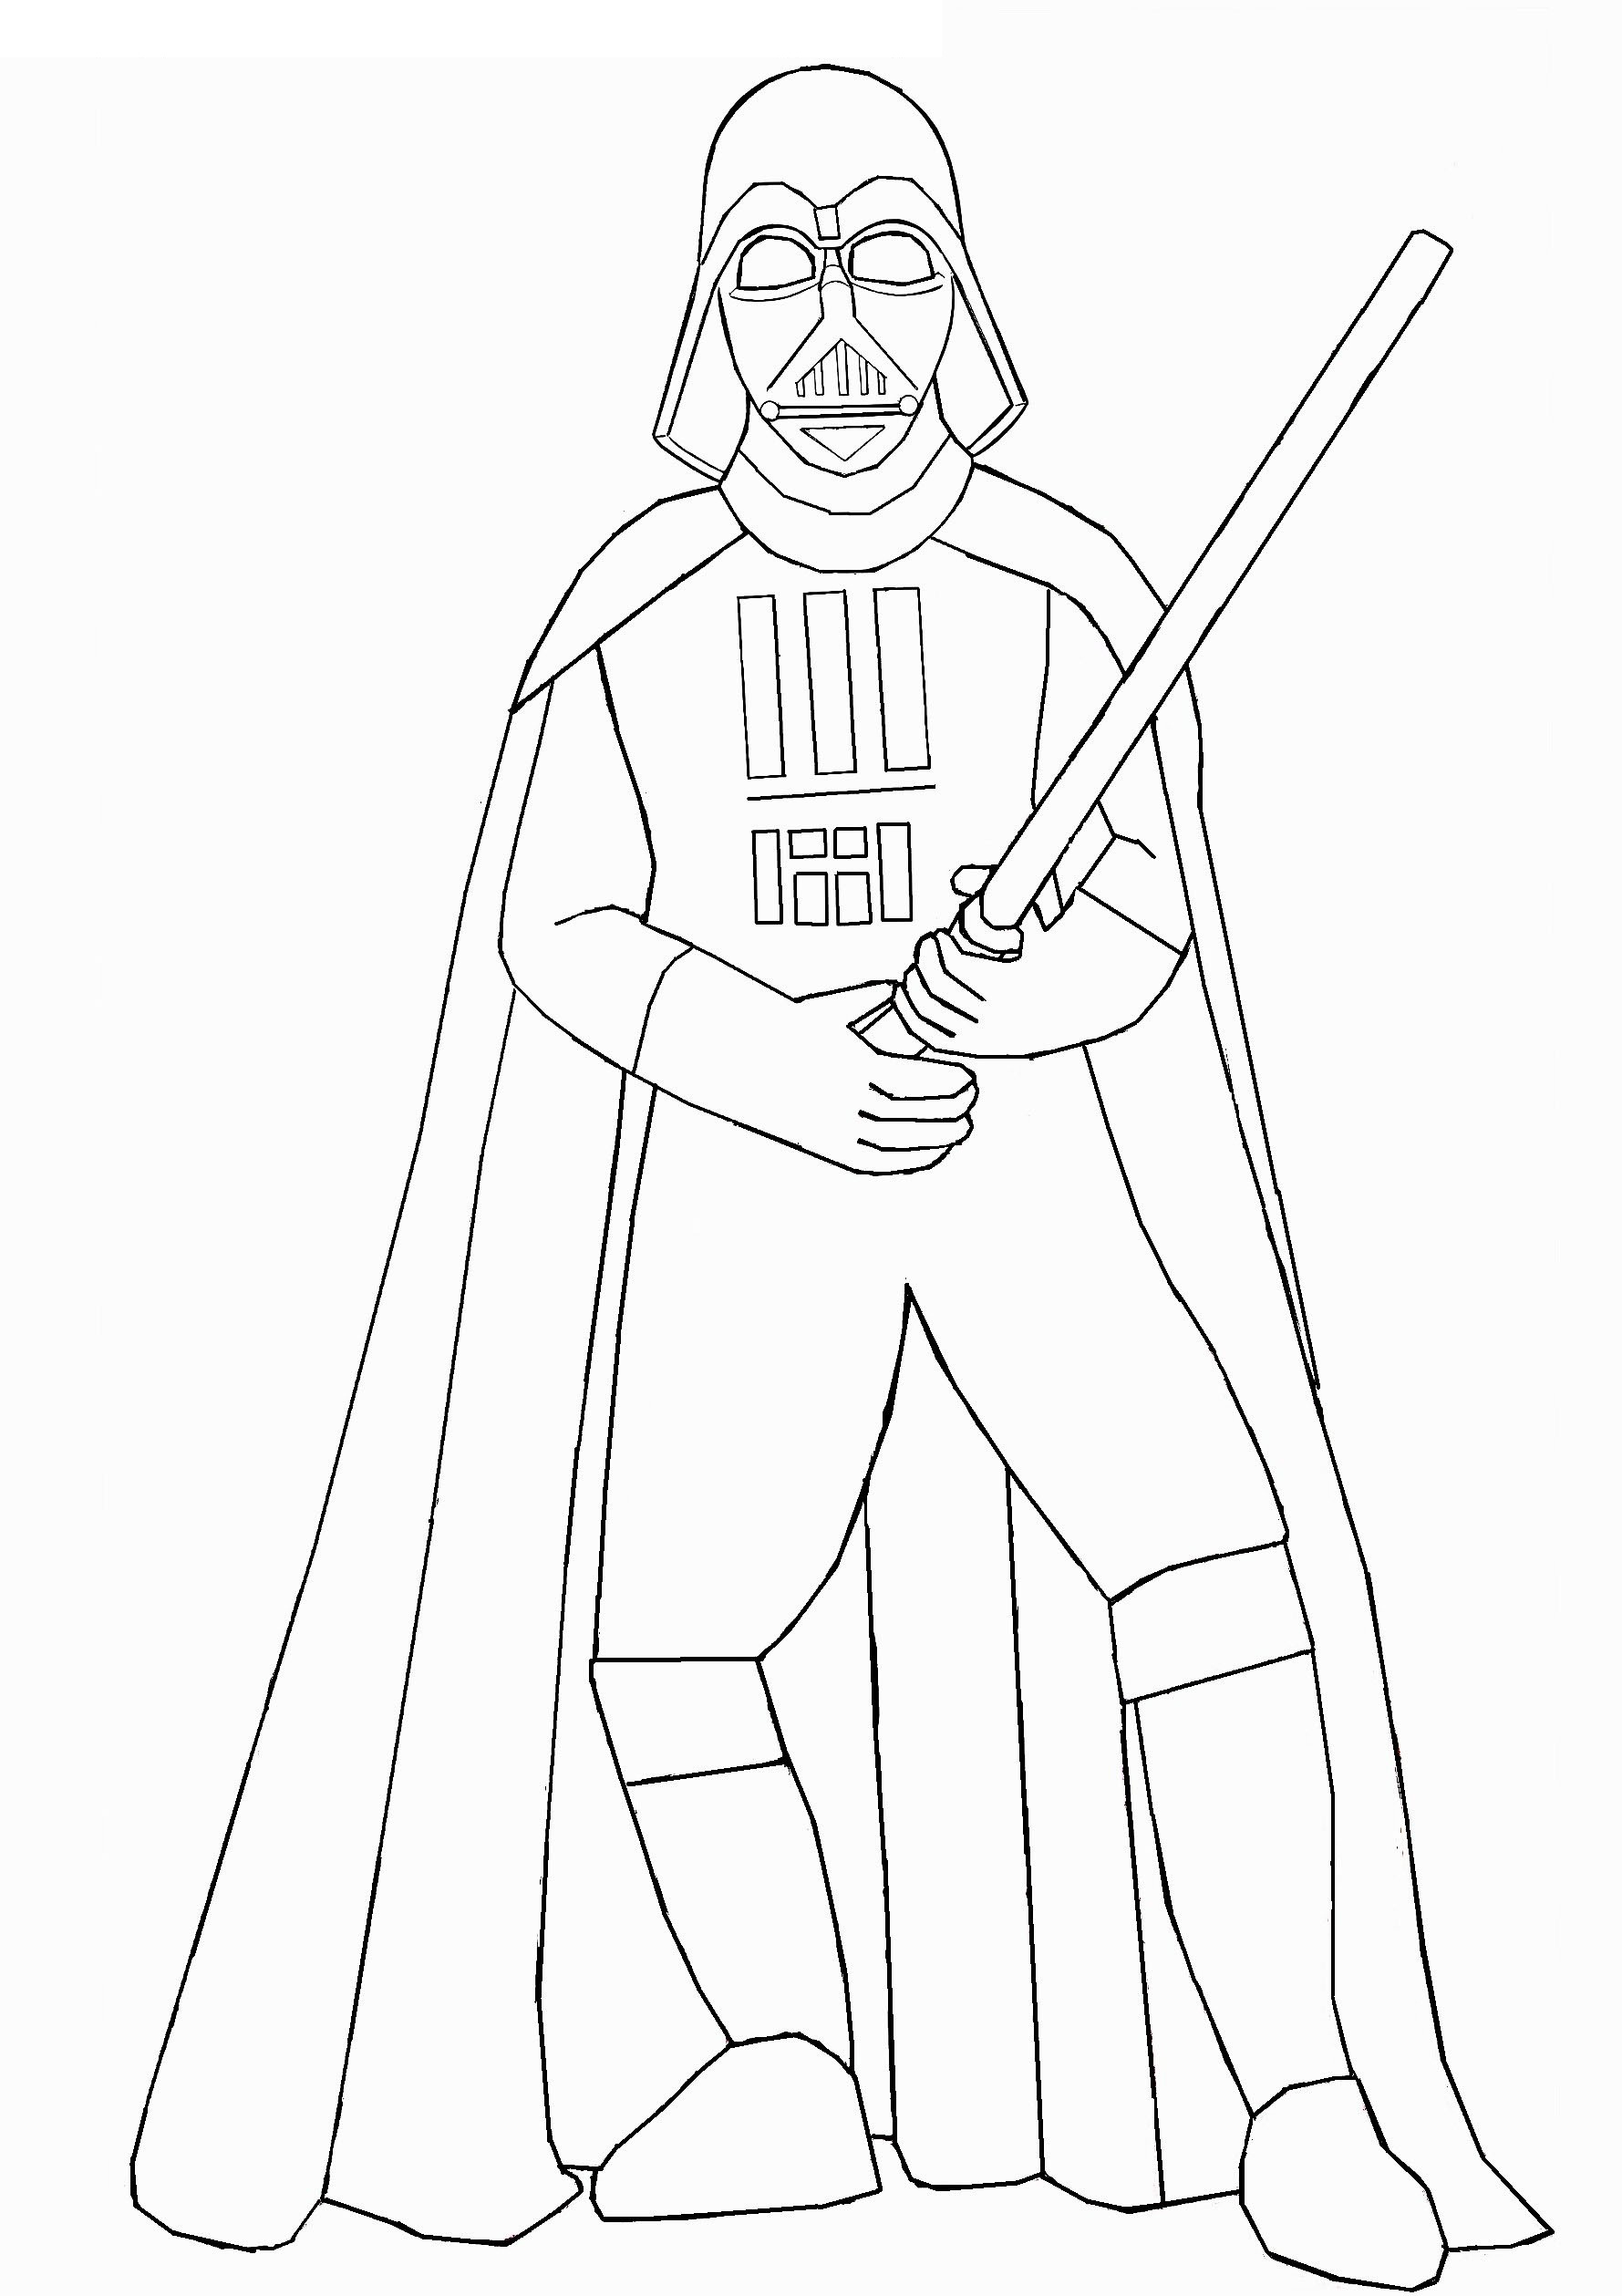 Darth Vader Holding Lightsaber Coloring Page - Free ...